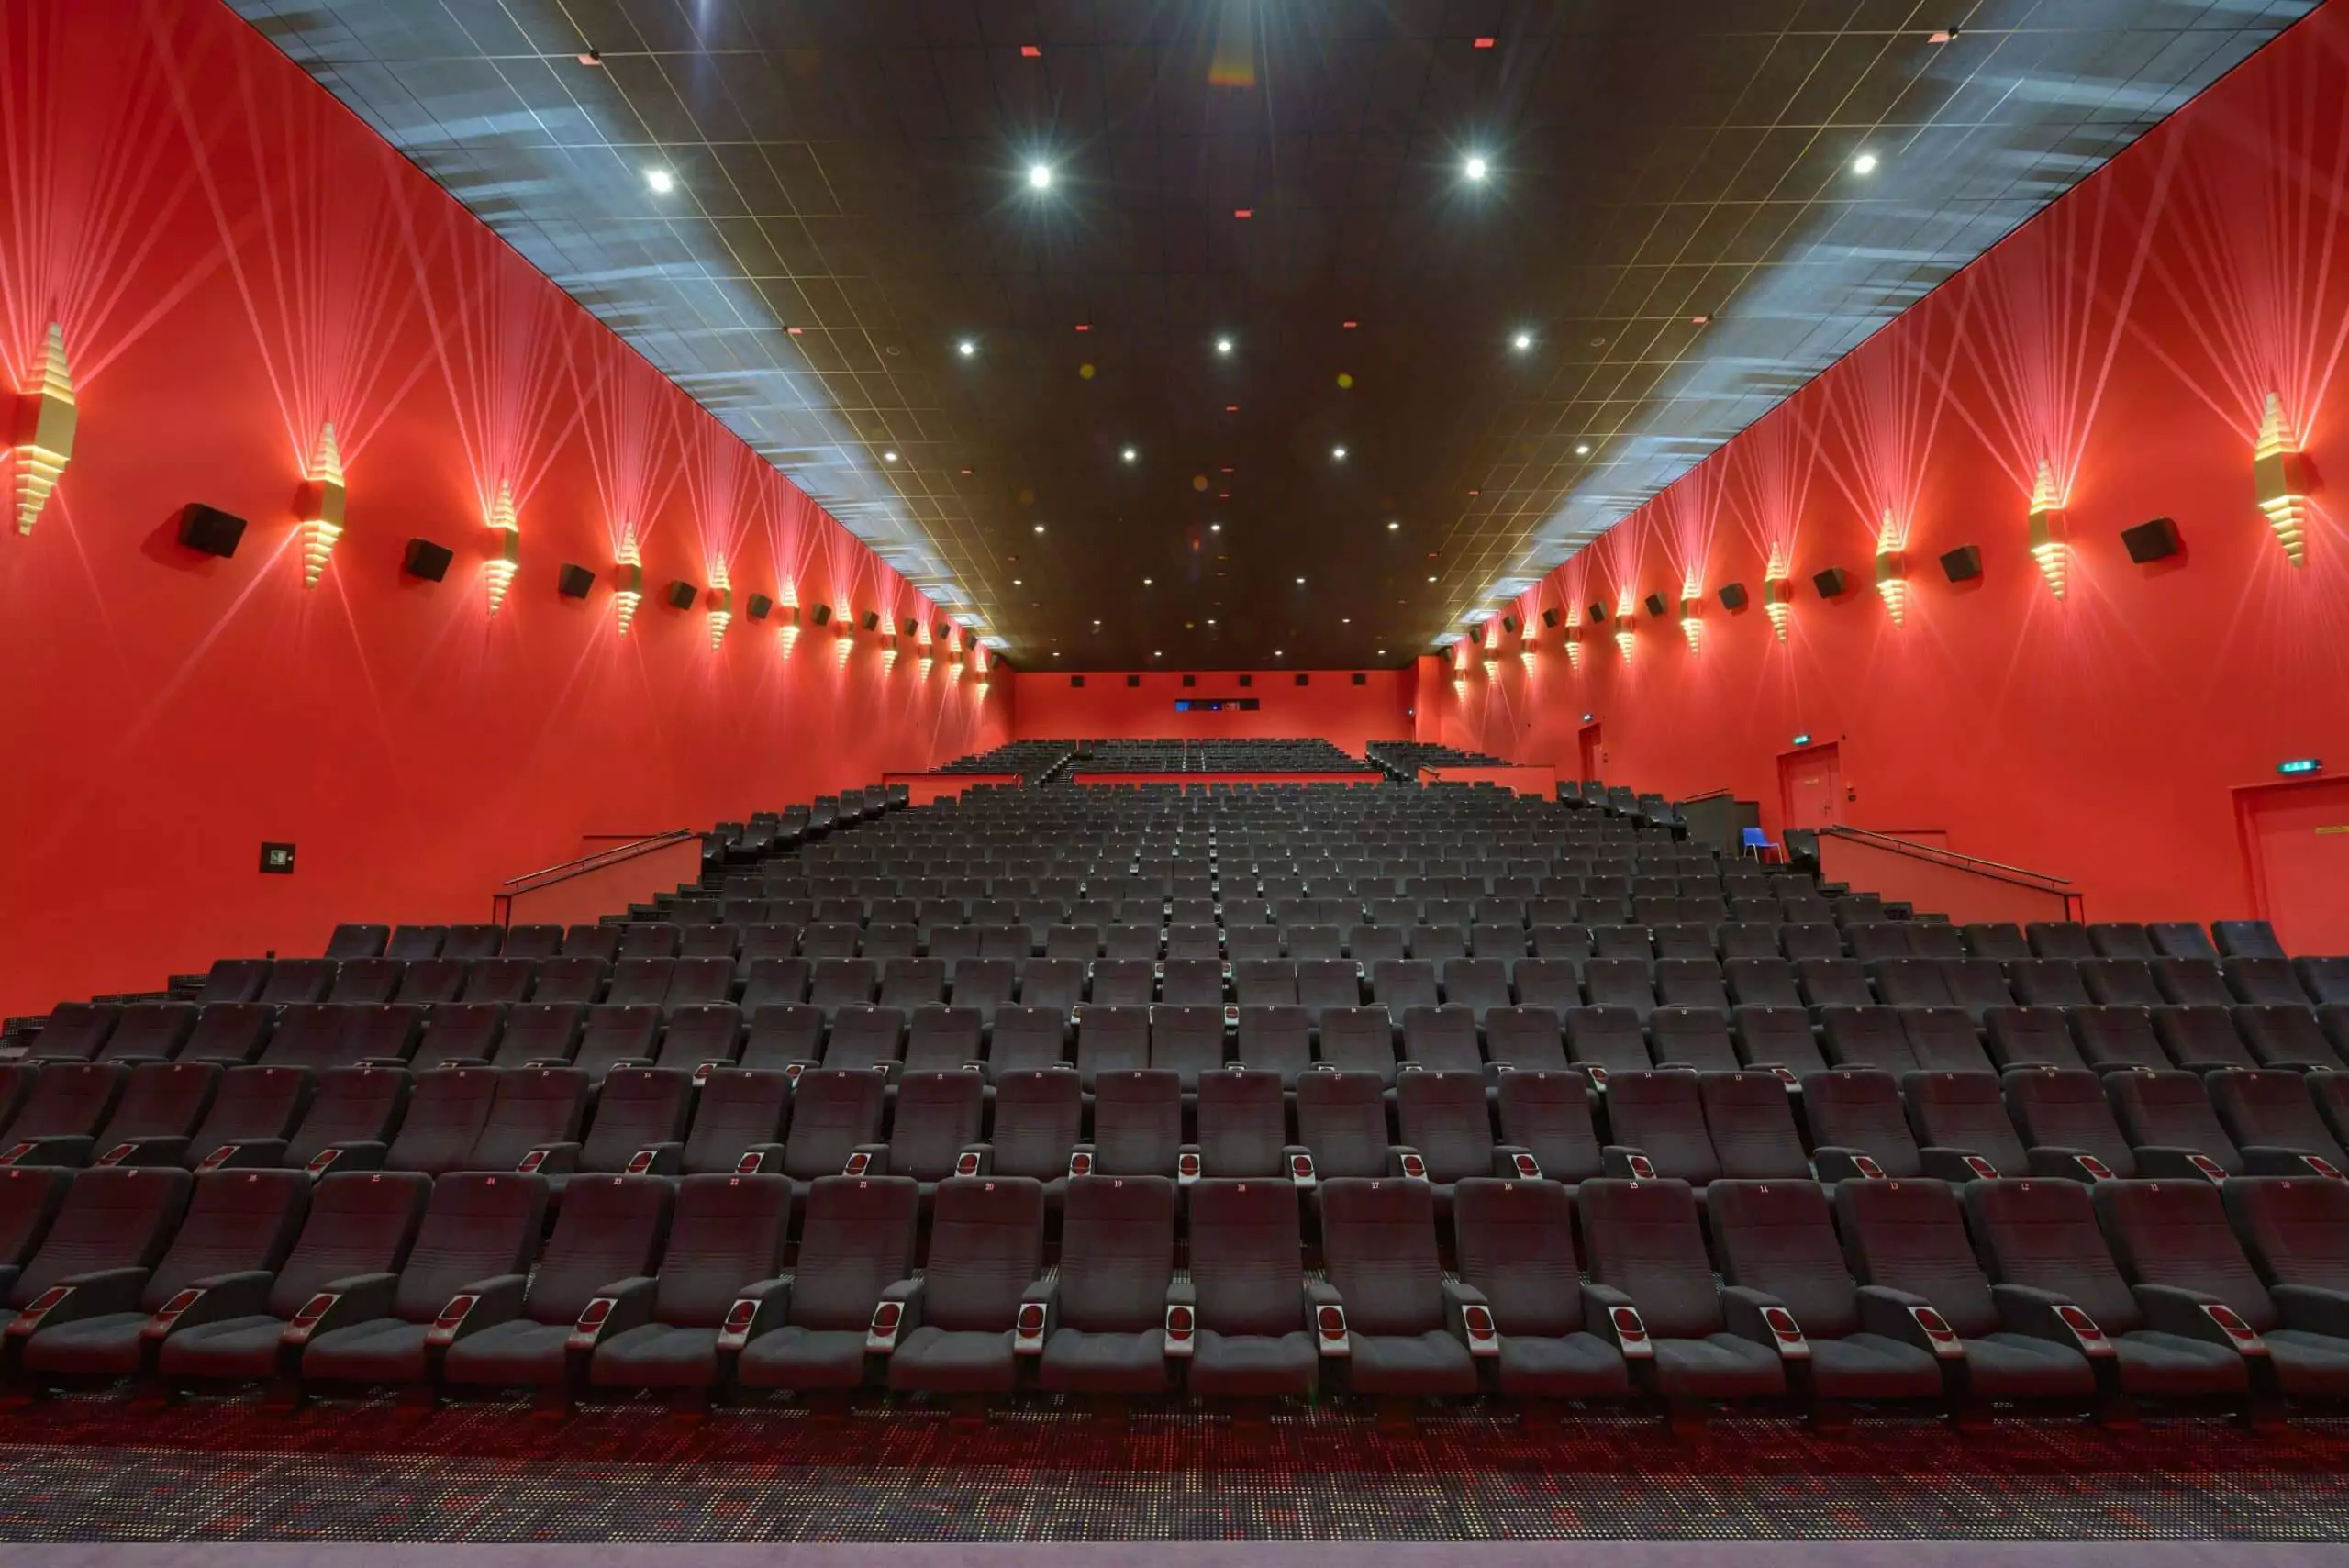 Cinema seating supplier Europe